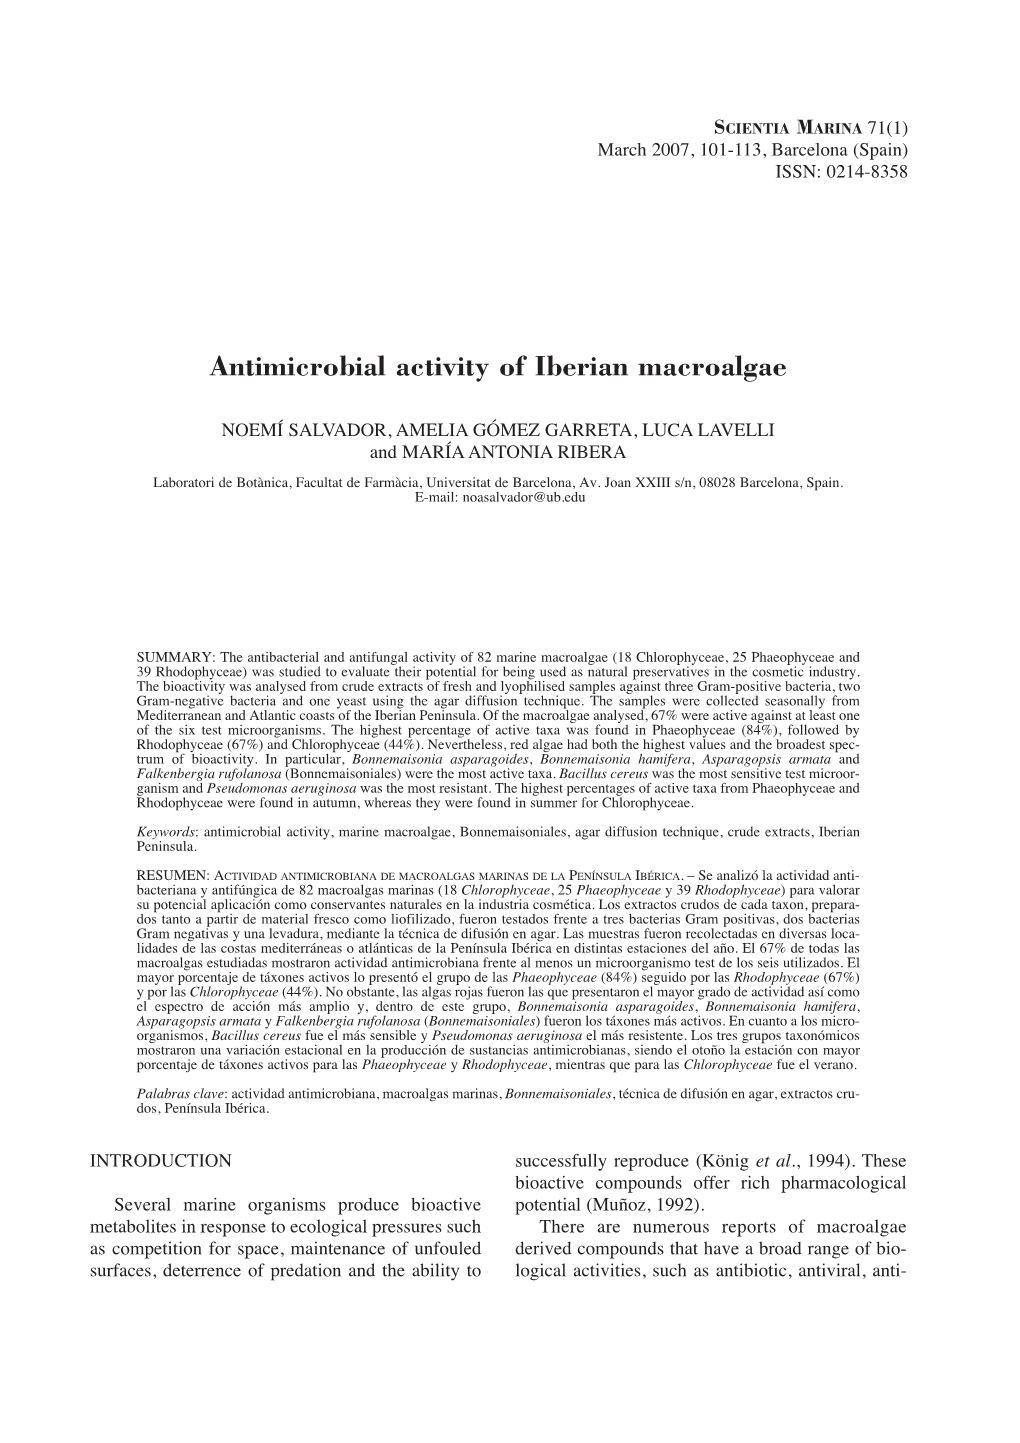 Antimicrobial Activity of Iberian Macroalgae